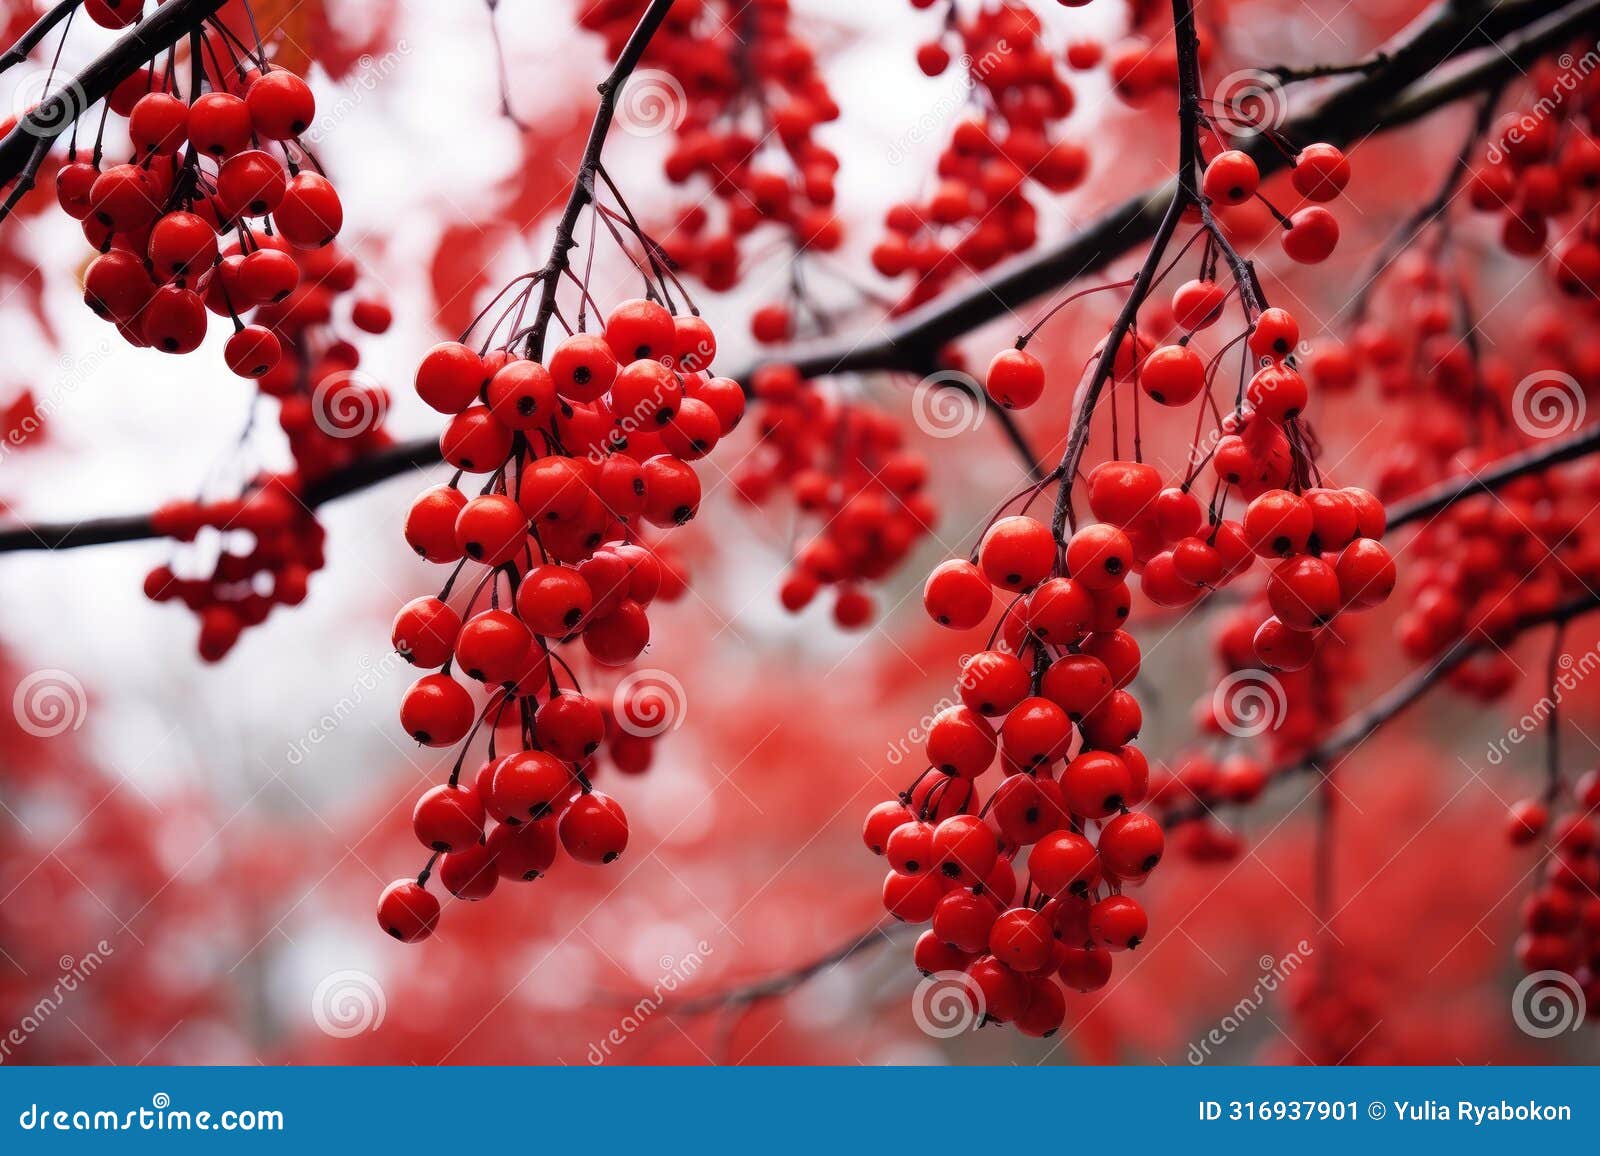 abundant red berries branch fall ripe. generate ai